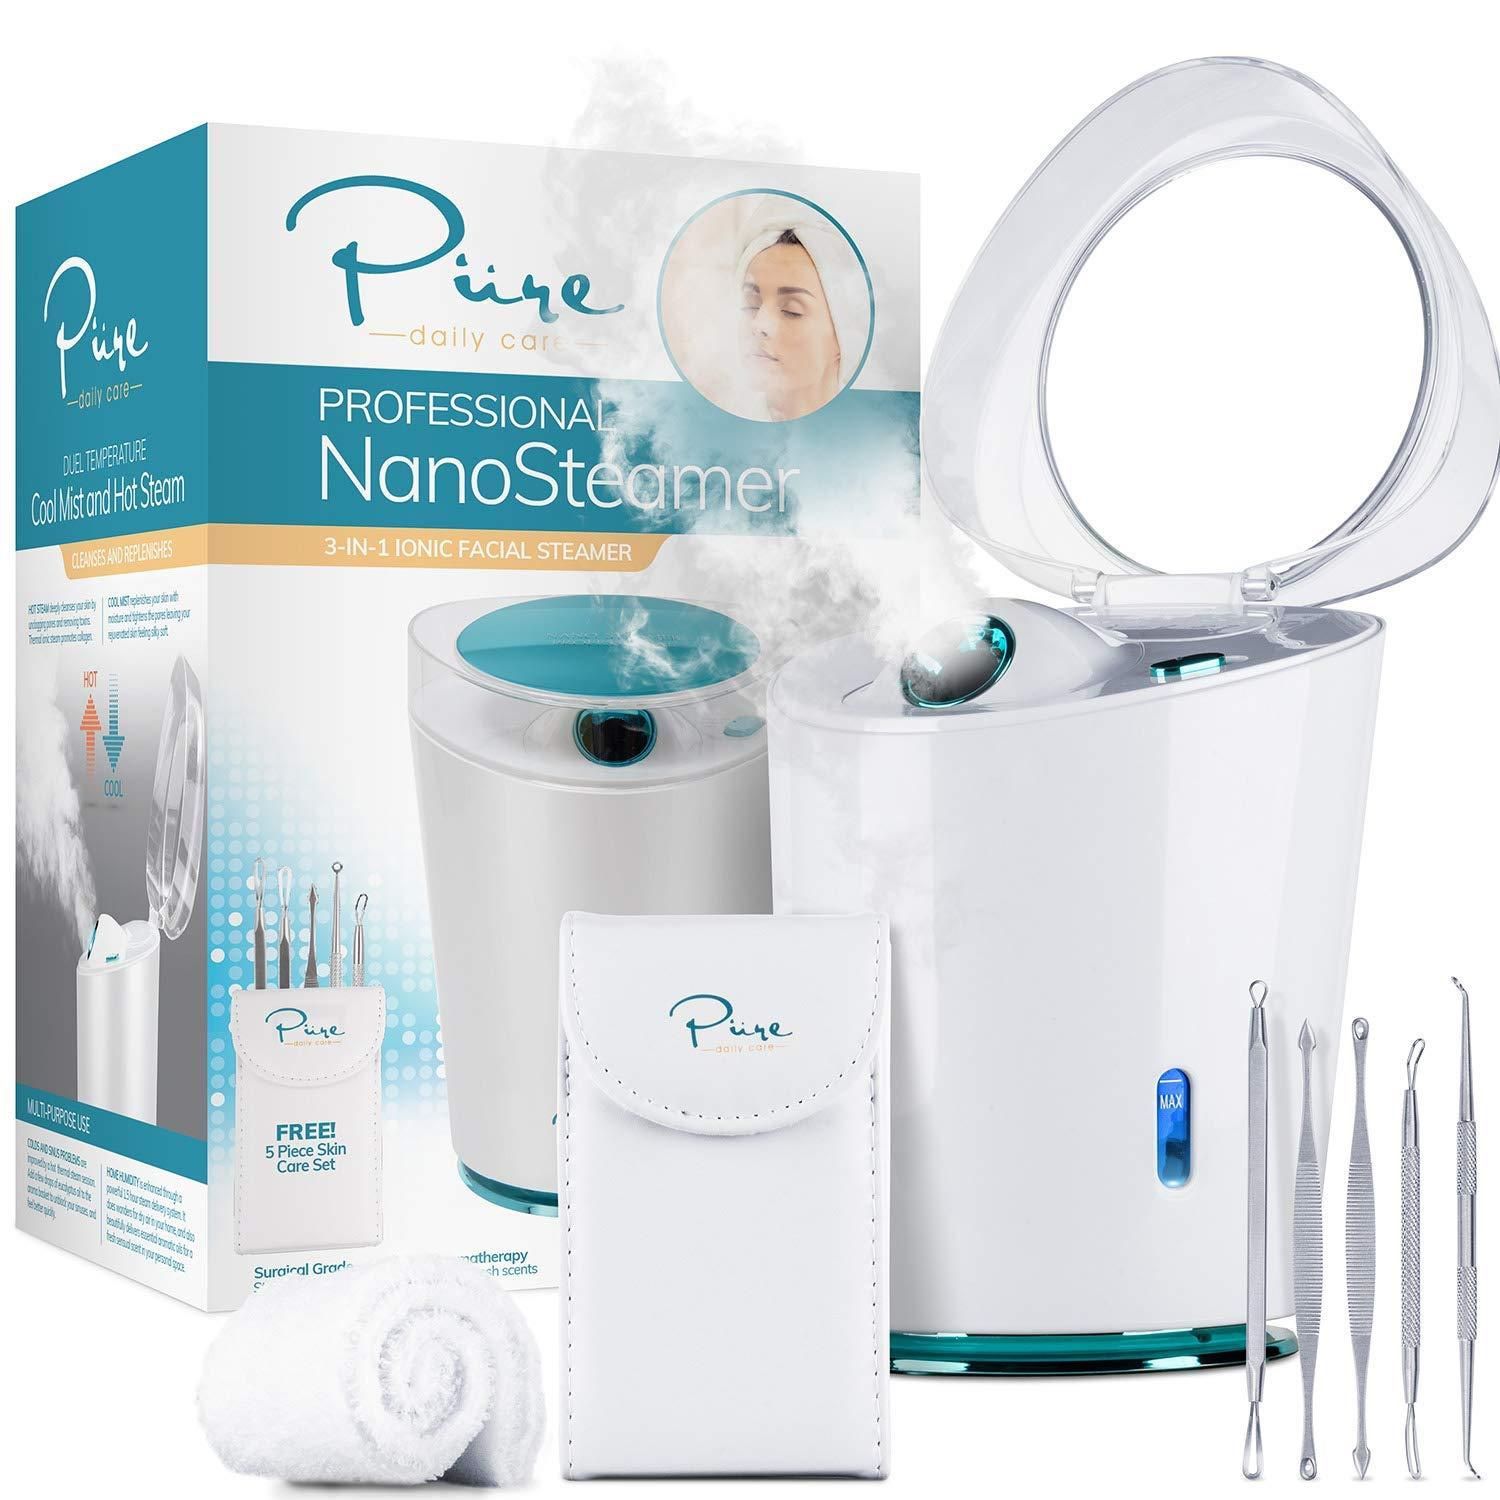 NanoSteamer Professional 3-in-1 Nano Ionic Facial Steamer for Spas